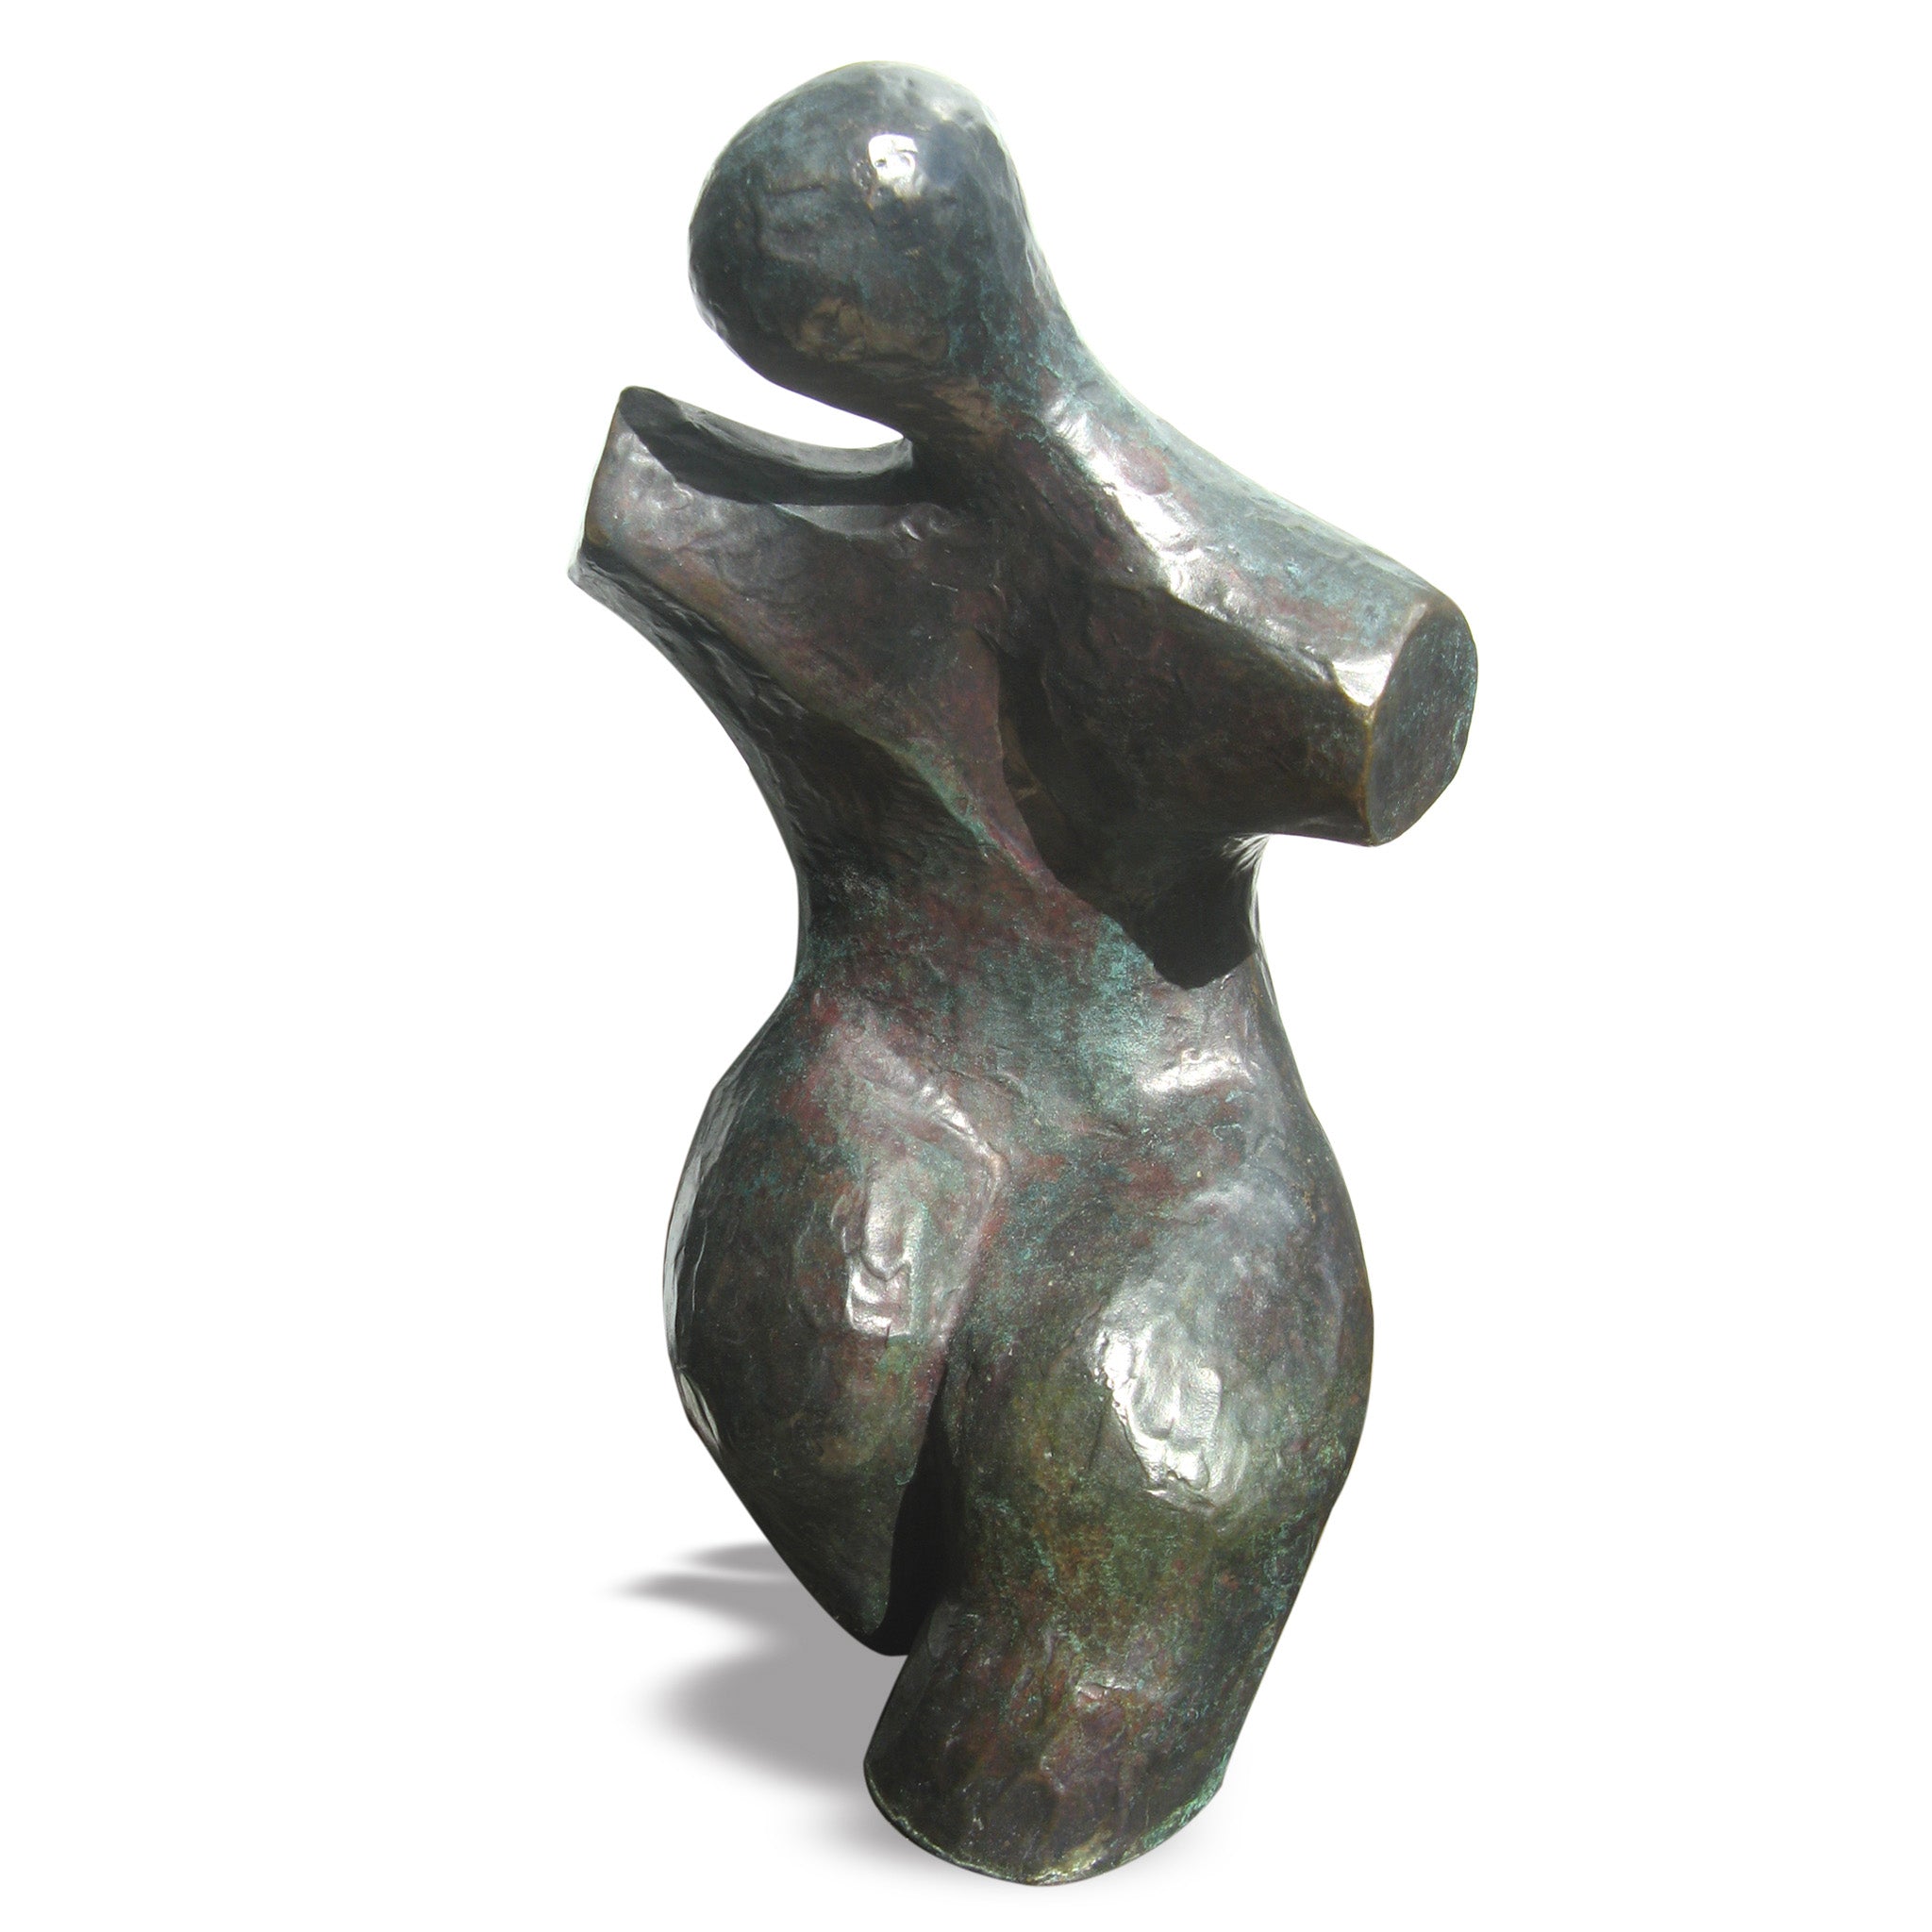 Standing female figurative bronze sculpture by Stephen Williams.